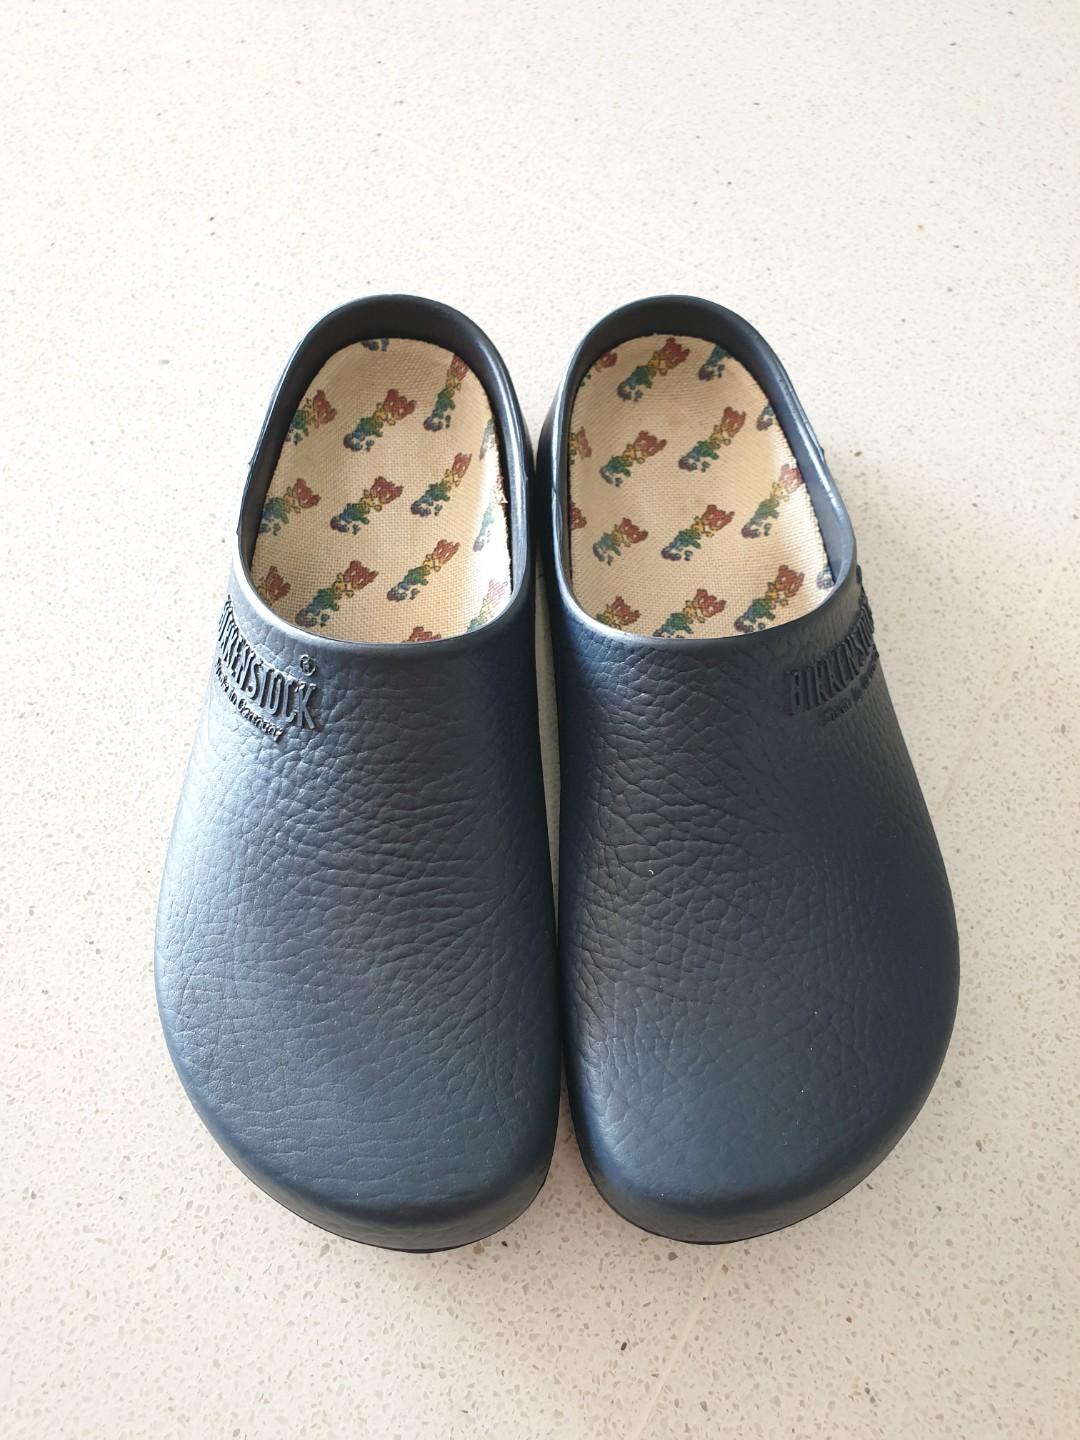 Birkenstock slip-on sandals, Men's 